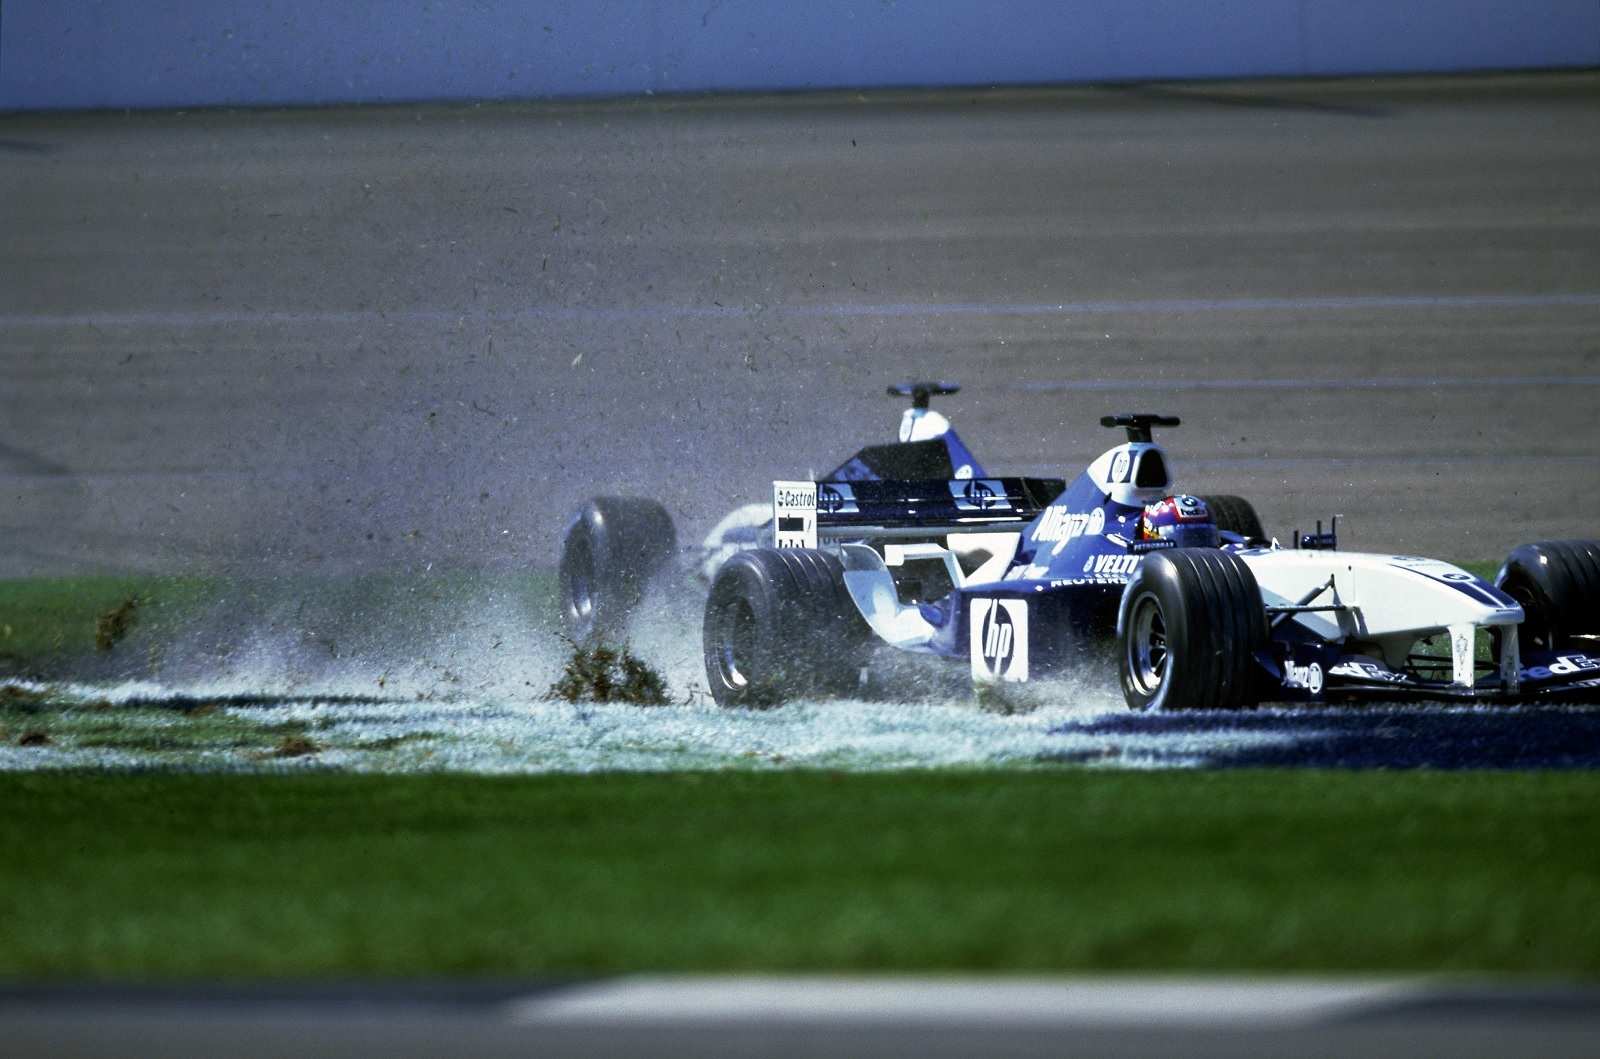 Outra batalha interna marcante na Williams foi entre Juan Pablo Montoya e Ralf Schumacher, que eliminou o rival do GP dos Estados Unidos de 2002 com um toque na asa traseira